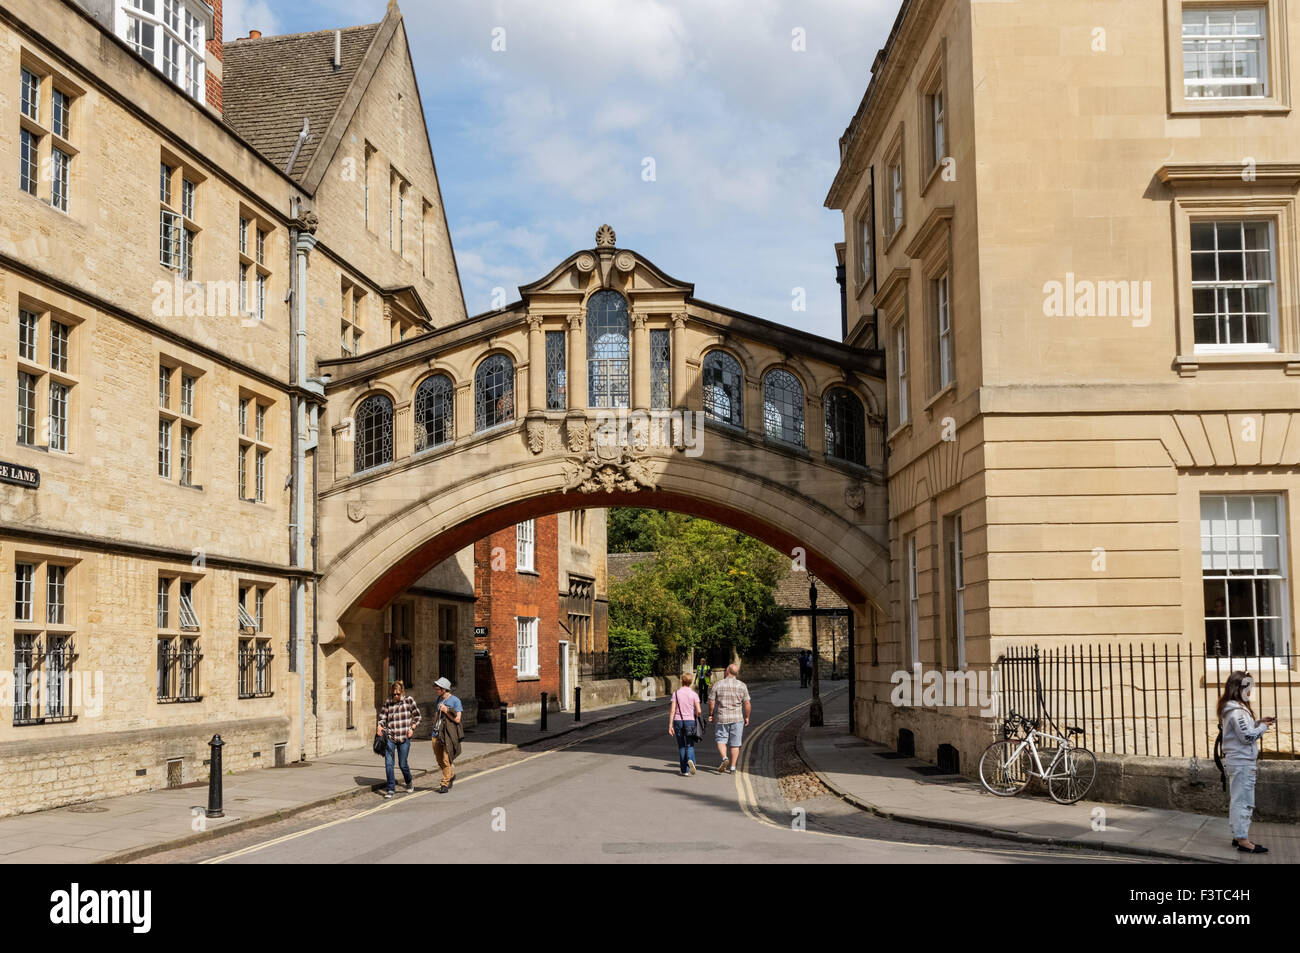 The Bridge of Sighs in Oxford Oxfordshire England United Kingdom UK Stock Photo